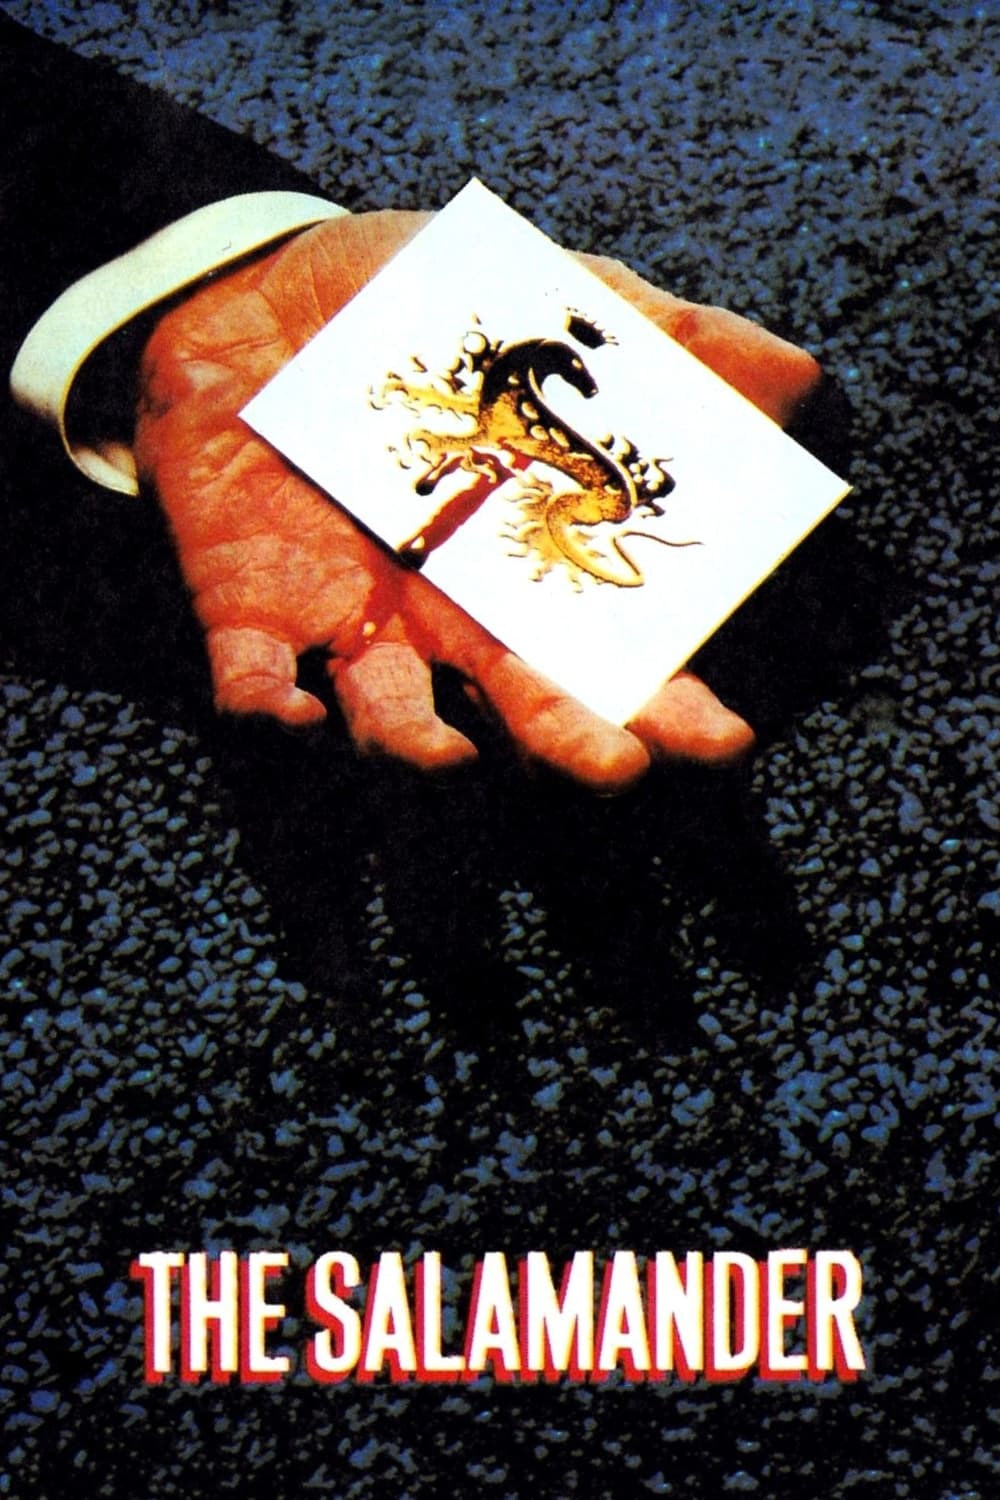 Kennwort Salamander (1981)